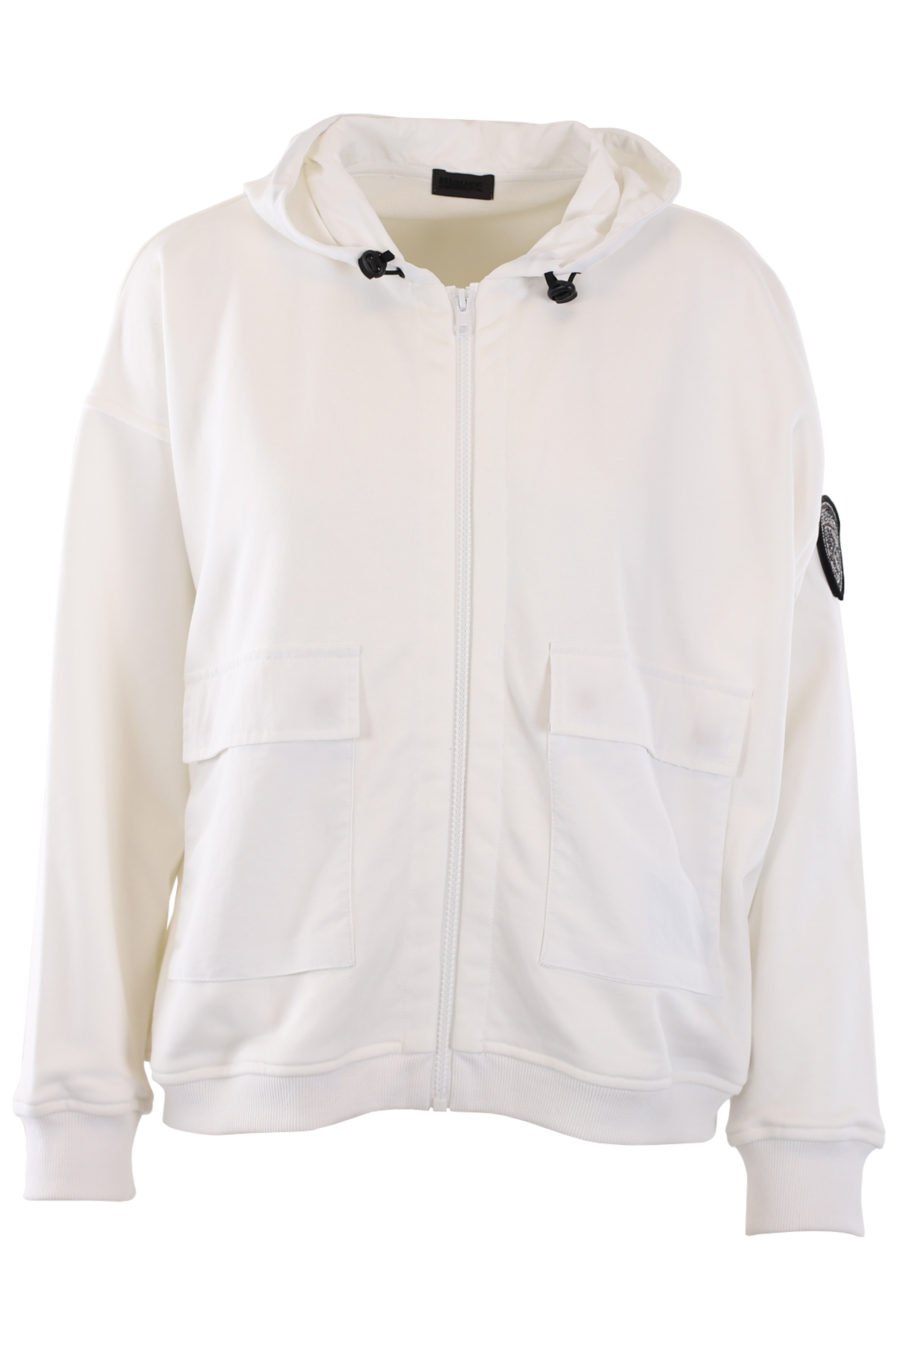 White tracksuit jacket with pockets - IMG 0838